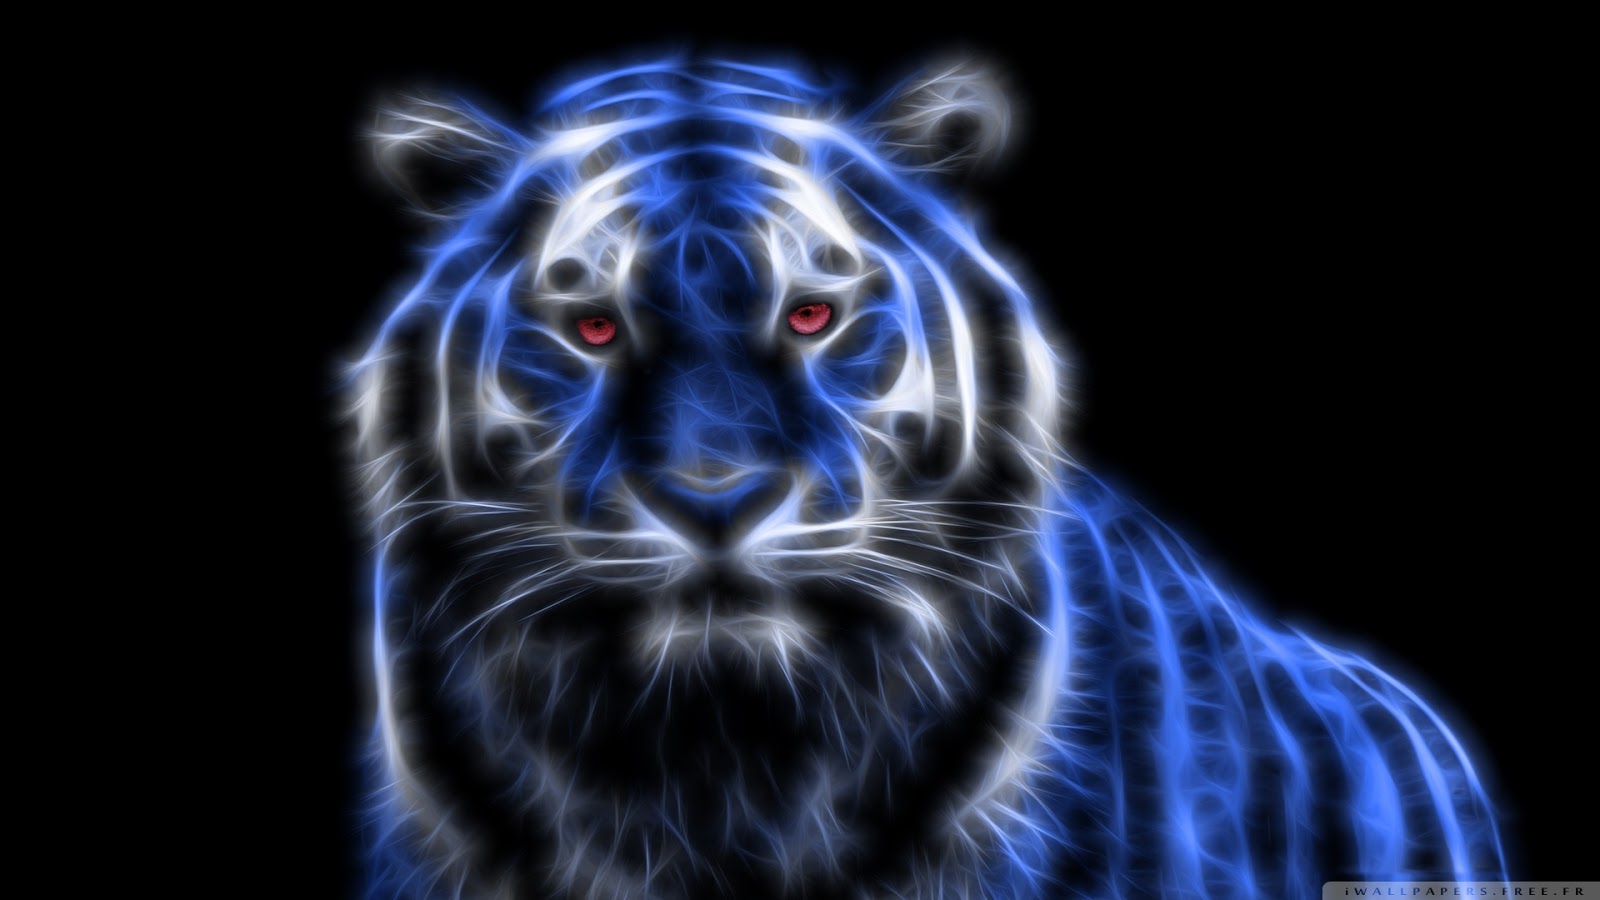 tigre wallpaper hd,felidae,blau,große katzen,bengalischer tiger,schnurrhaare